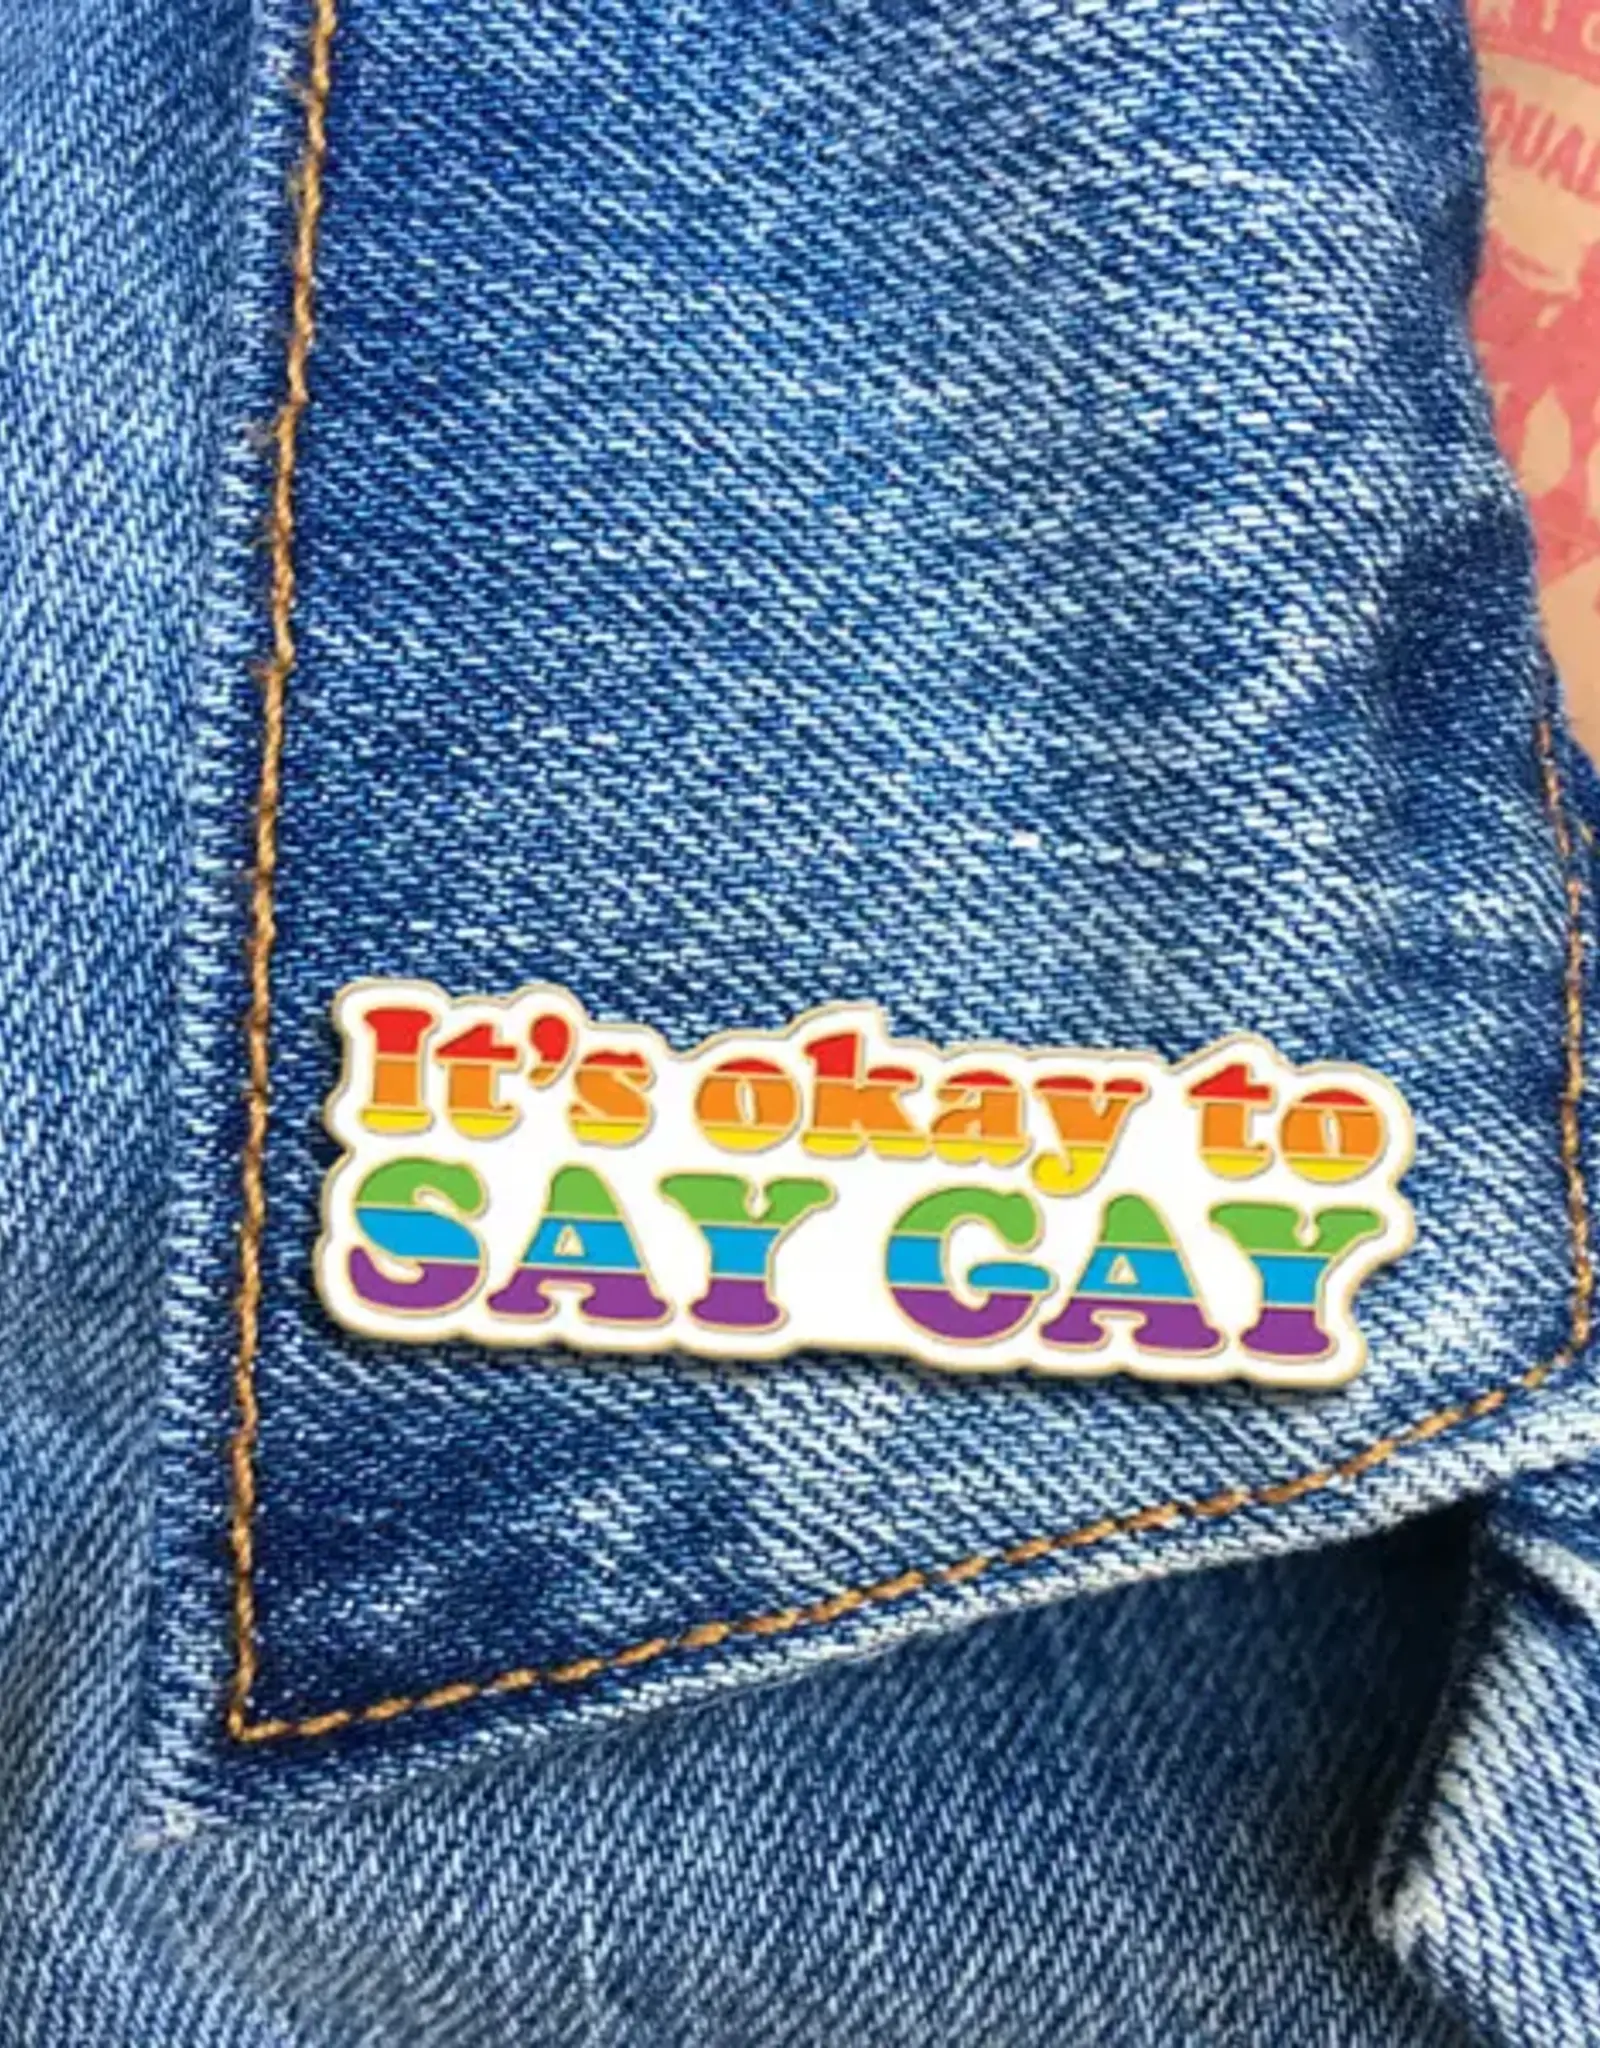 The Found Enamel Pin: Okay To Say Gay